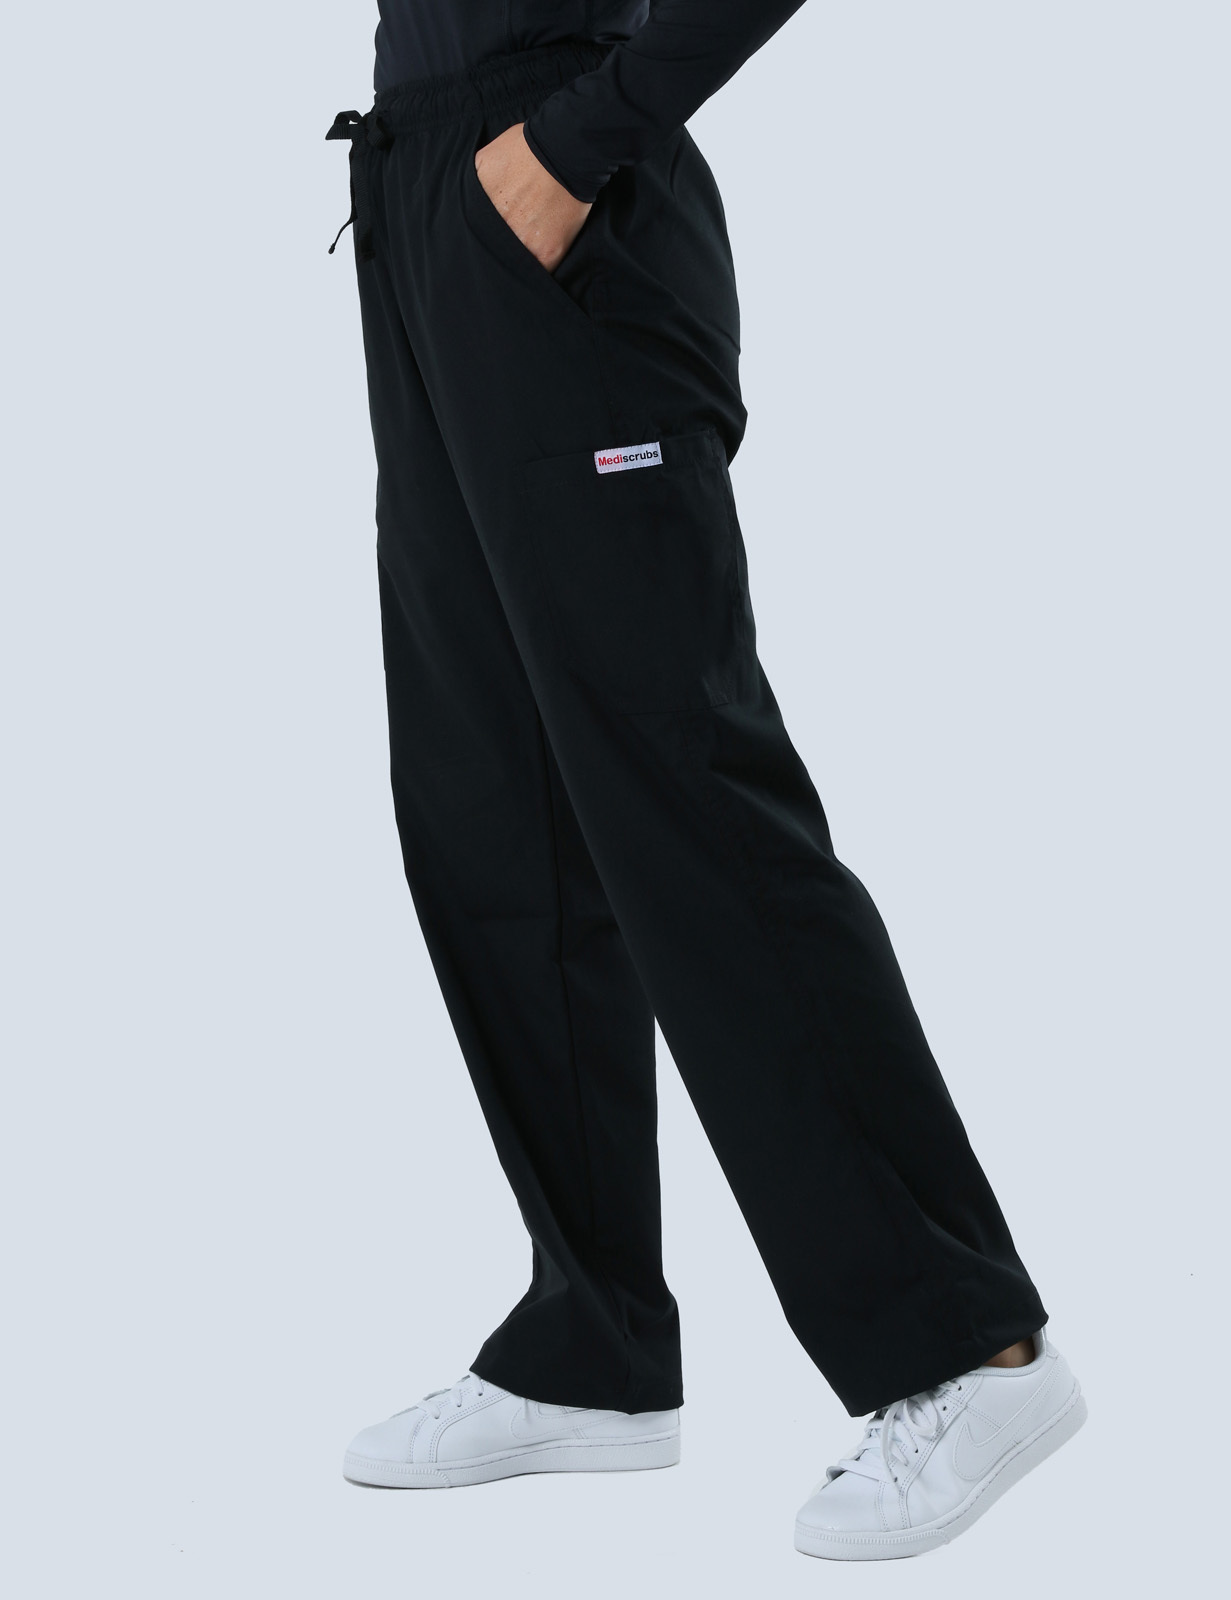 Women's Cargo Performance Pants - Black - 5x Large